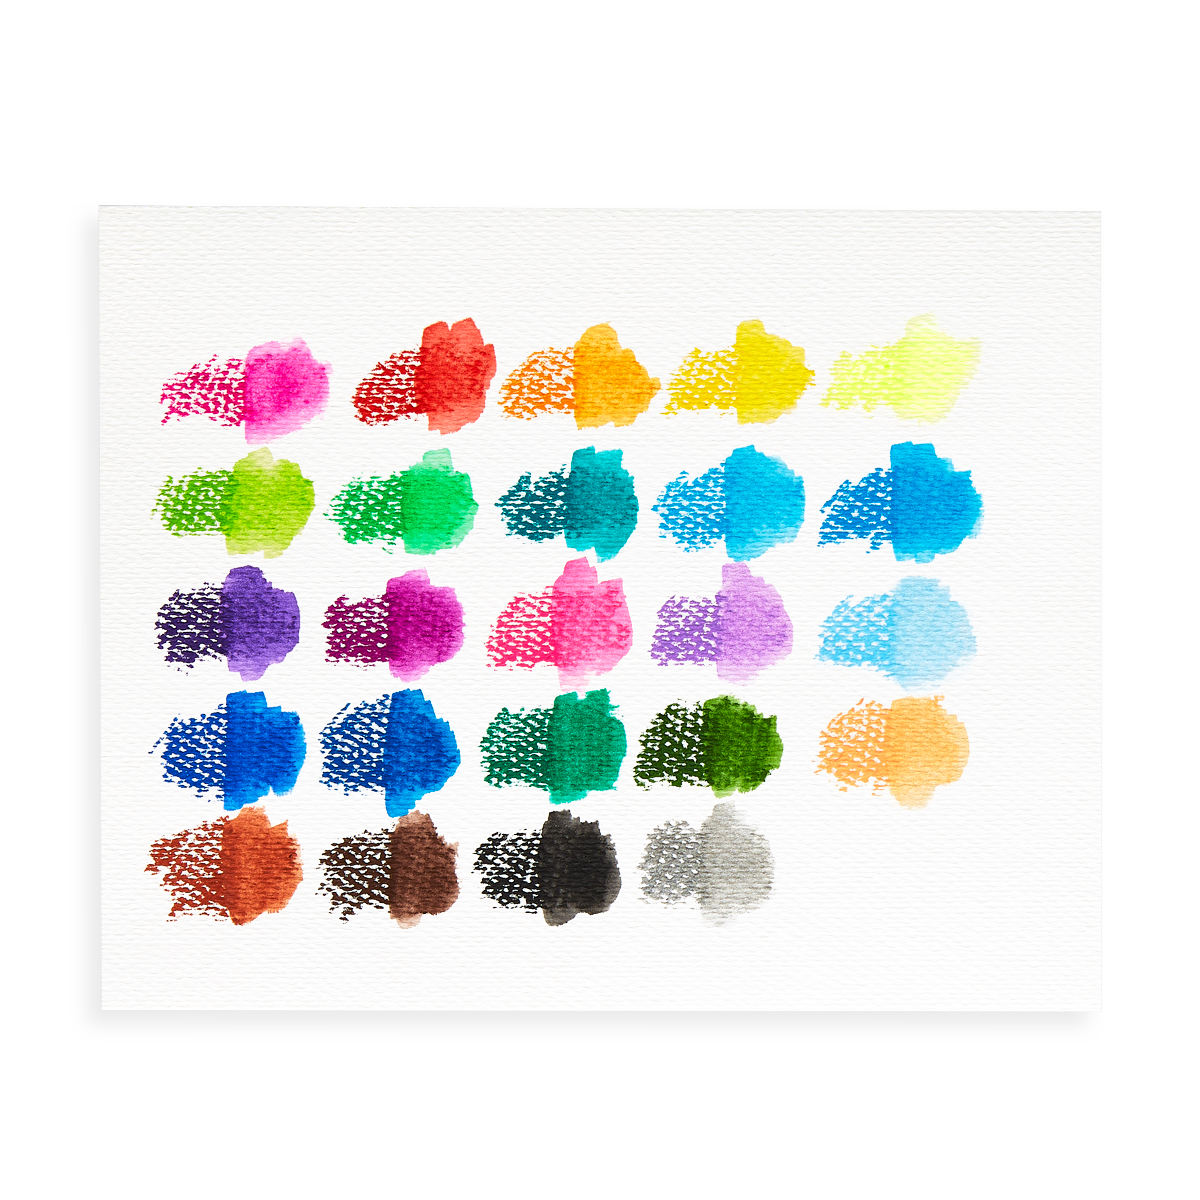 OOLY: Crayon Sticks, Color Appeel